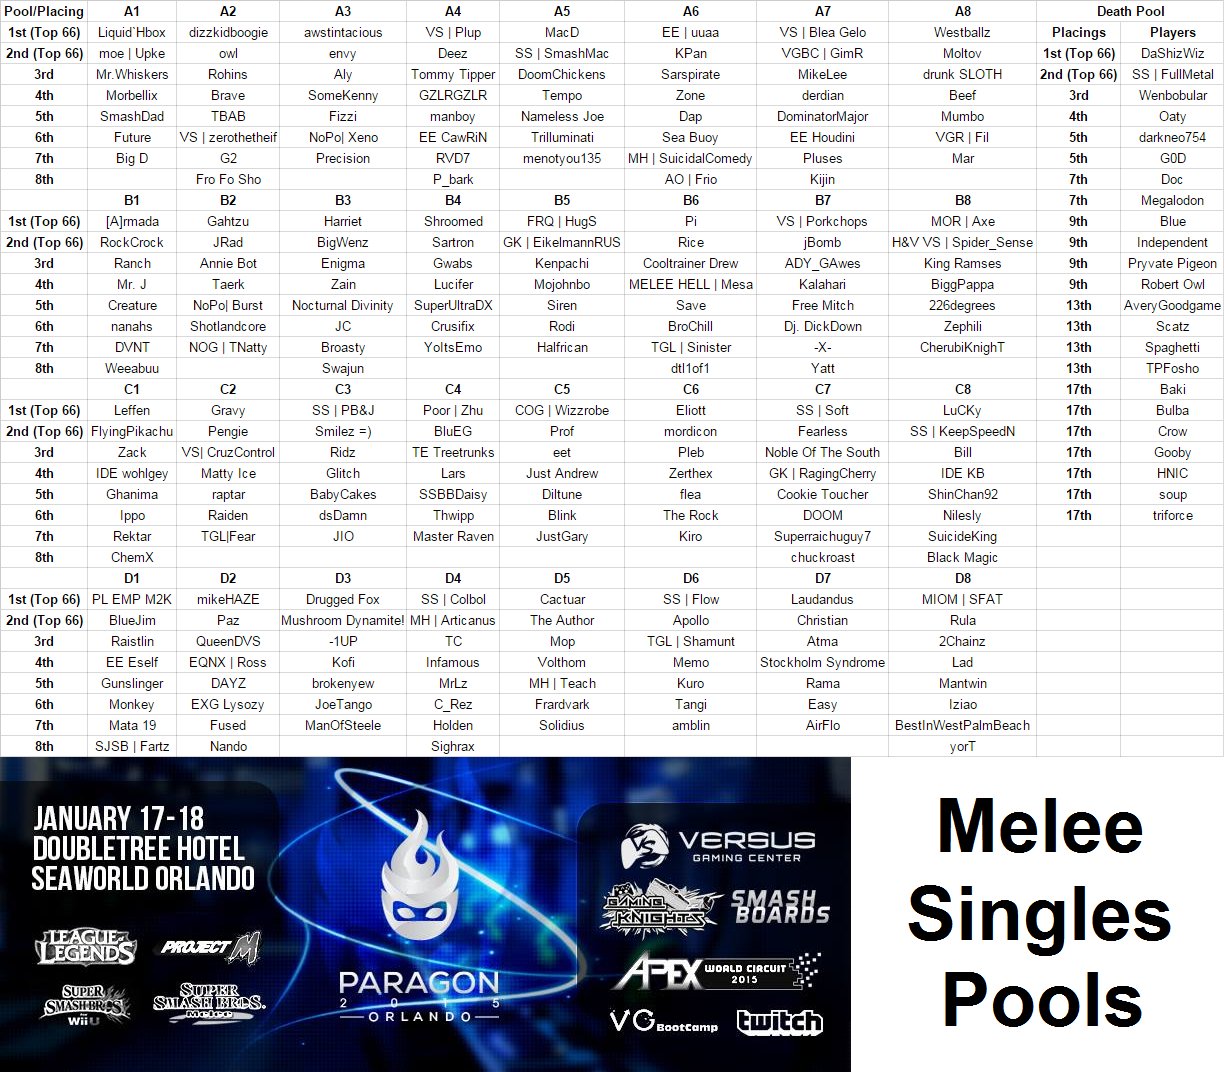 Paragon 2015: Melee Singles Pools